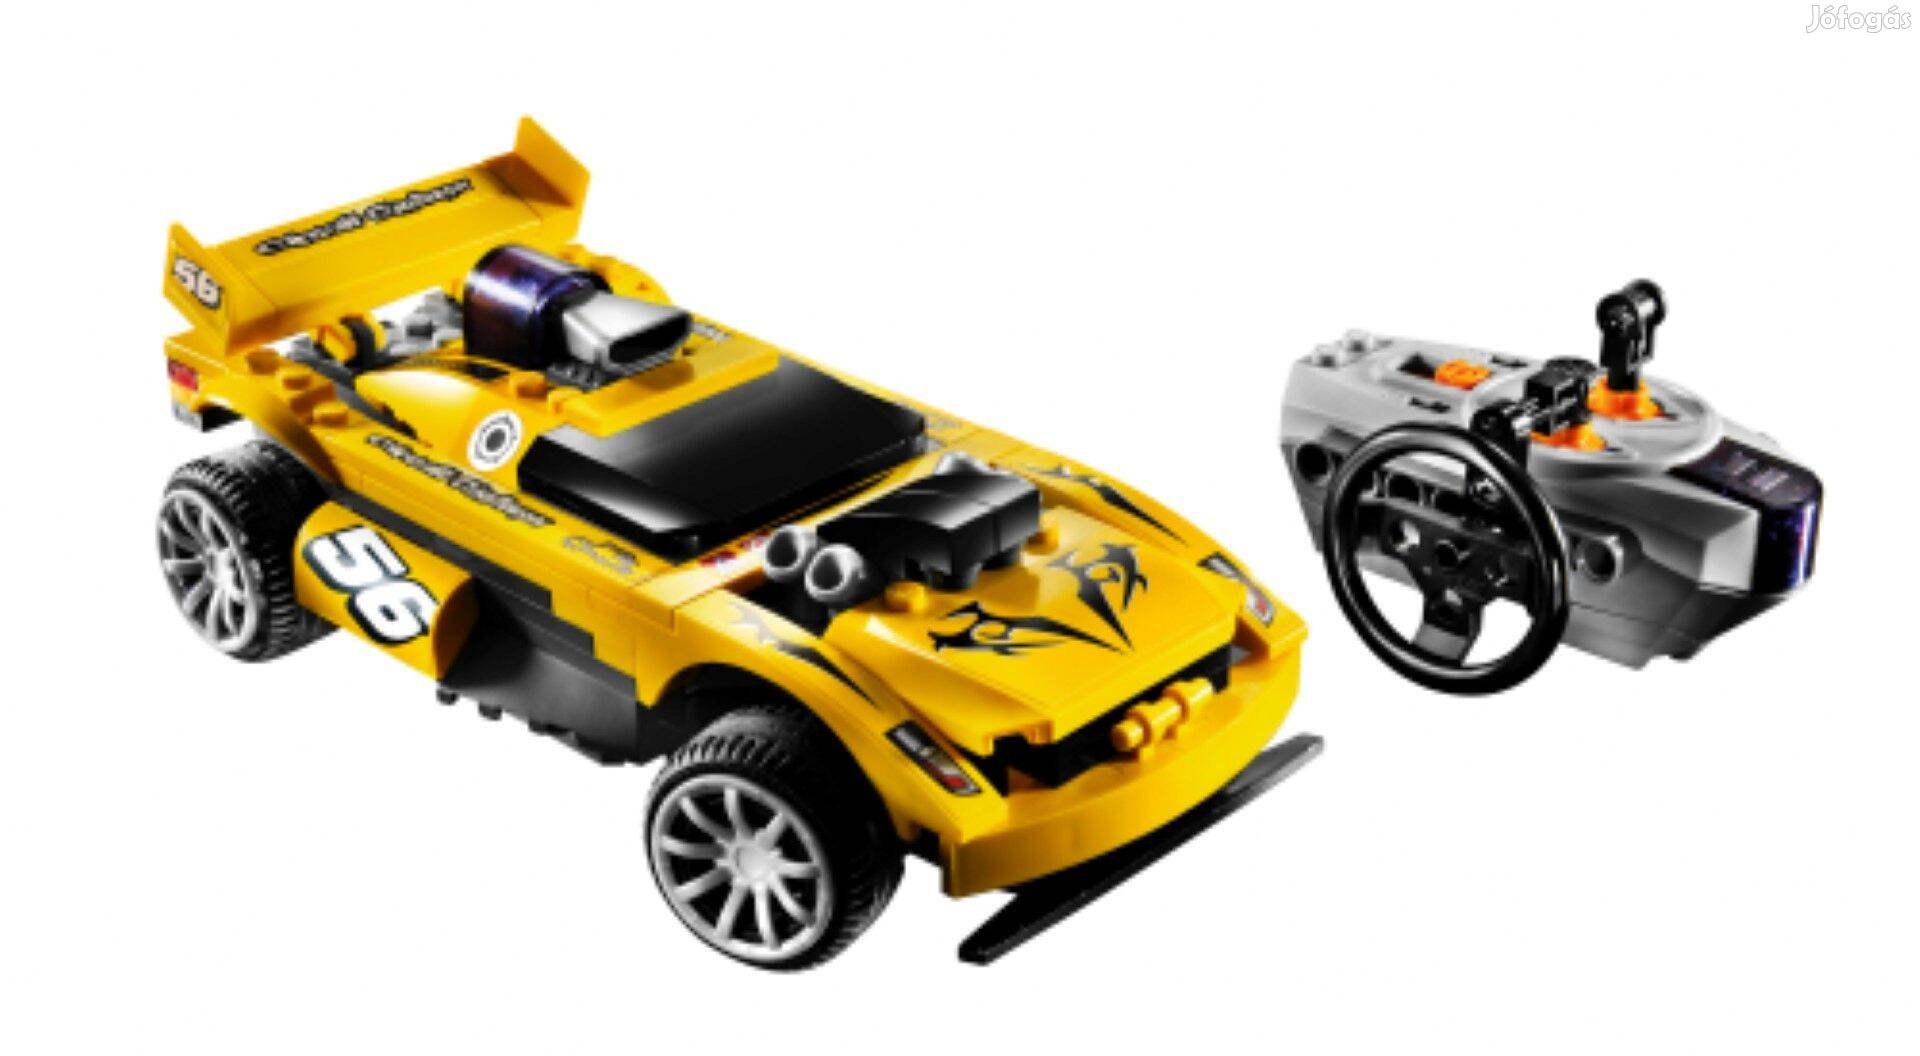 LEGO 8183 [Racers] - Track Turbo RC